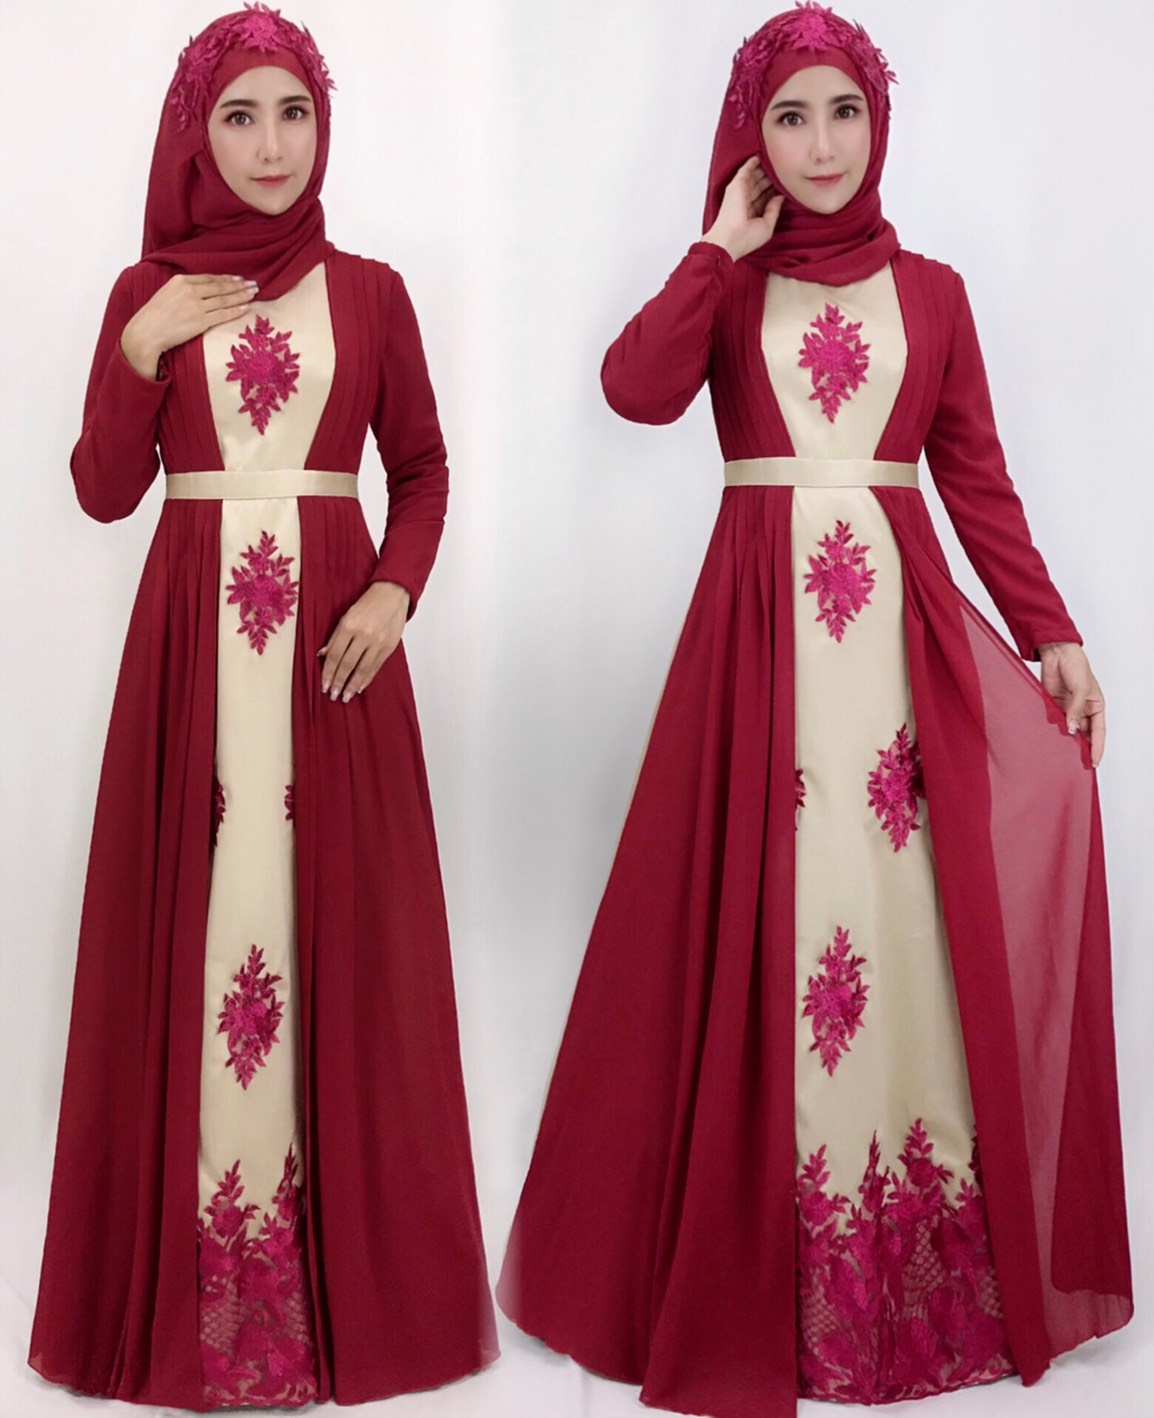 Dress Muslim BD006 ชุดอิสลาม สวยๆ เดรสมุสลิม ชุดเดรสอิสลาม พร้อมผ้าคลุม ชุดรายอมุสลิม แฟชั่นมุสลิม เสื้อผ้ามุสลิม  อะบายา Abaya ฮีญาบ hijab DressMuslim